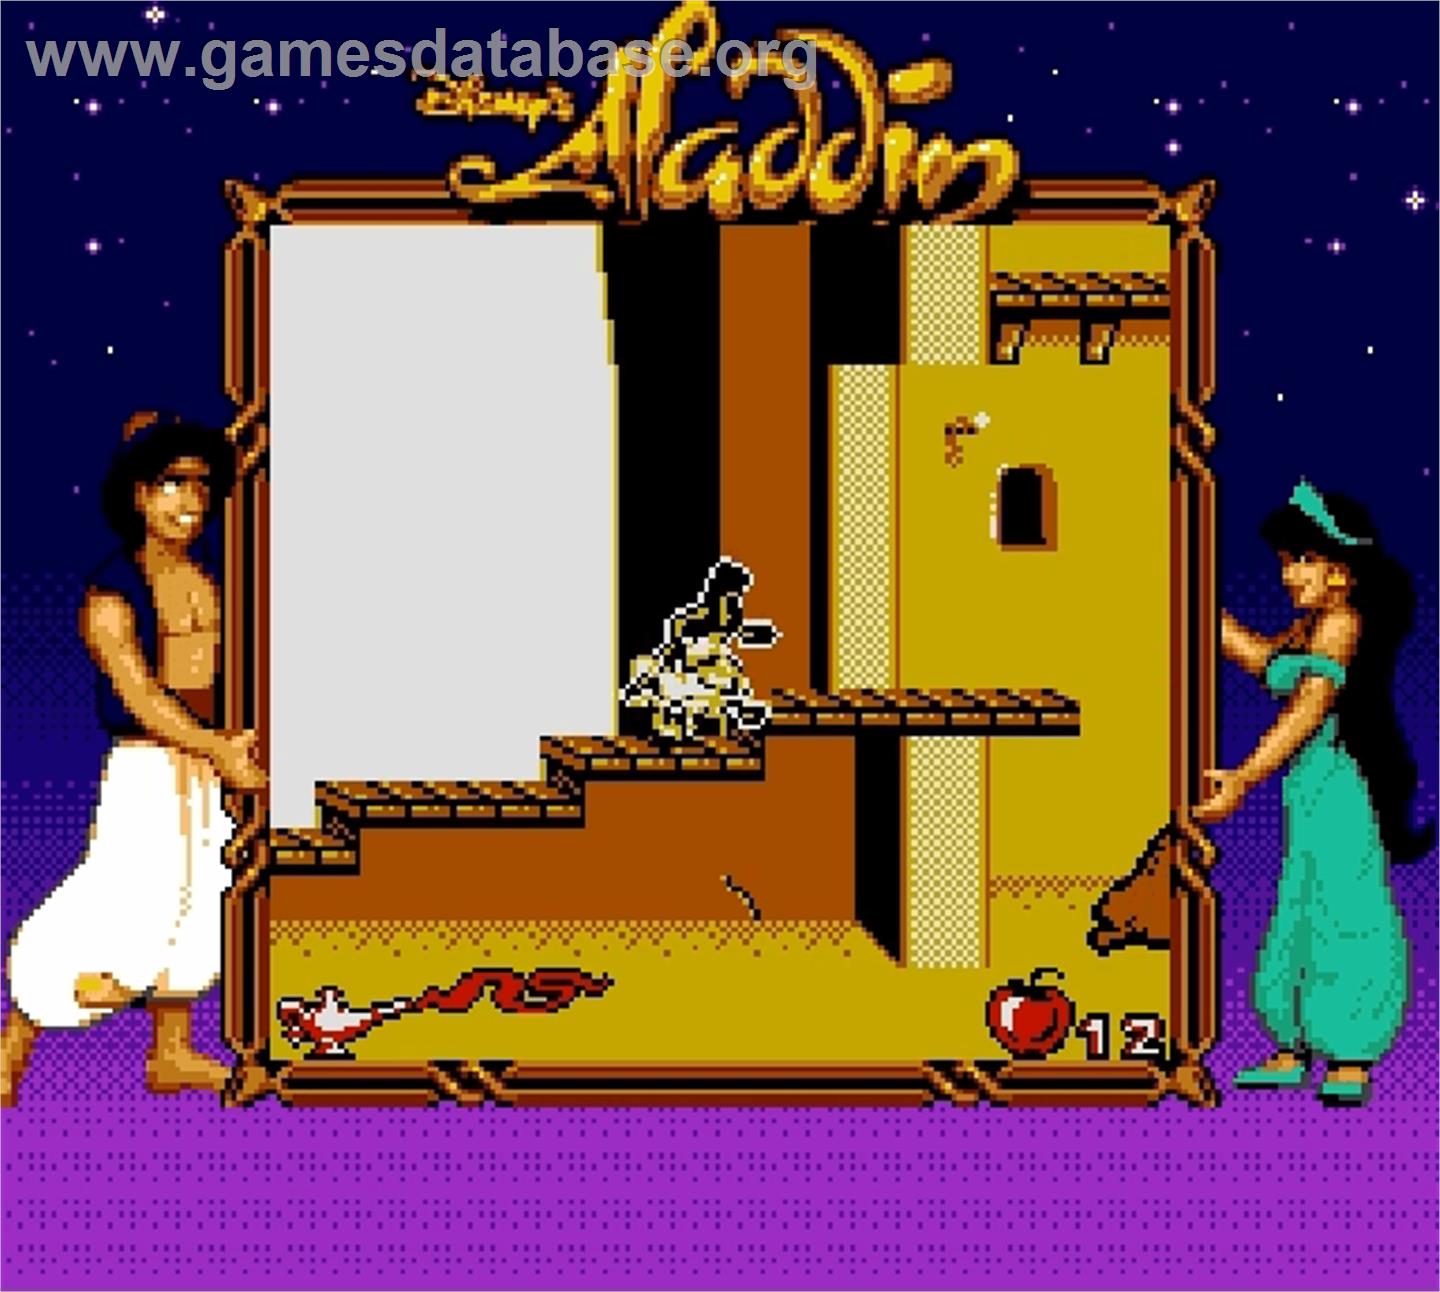 Aladdin - Nintendo Super Gameboy - Artwork - In Game